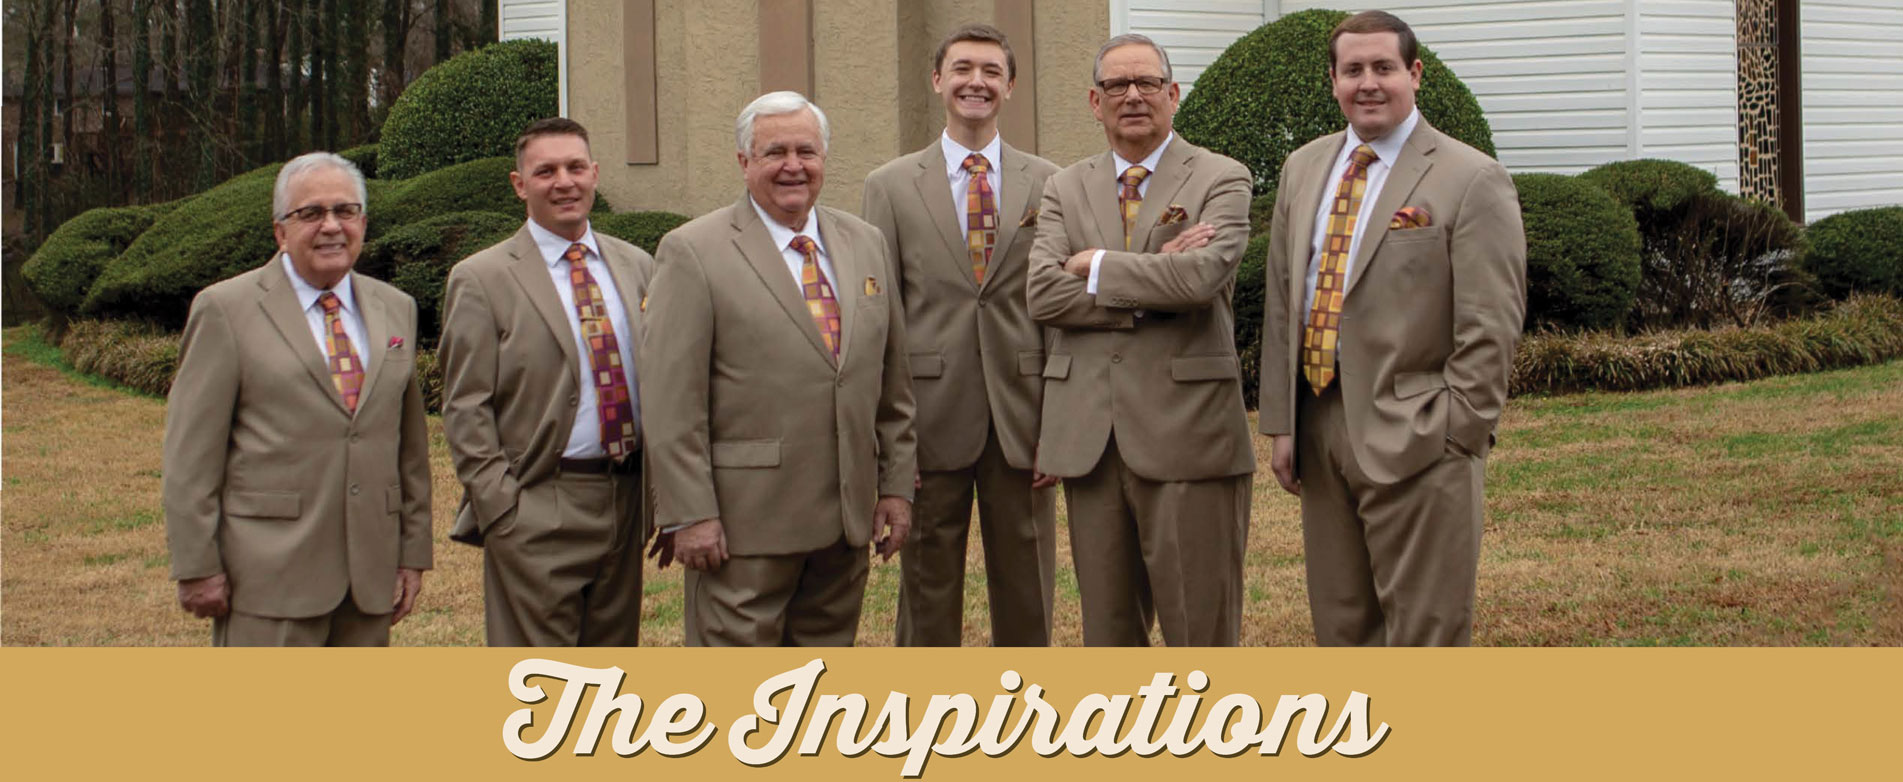 The Inspirations Quartet Info Page Header